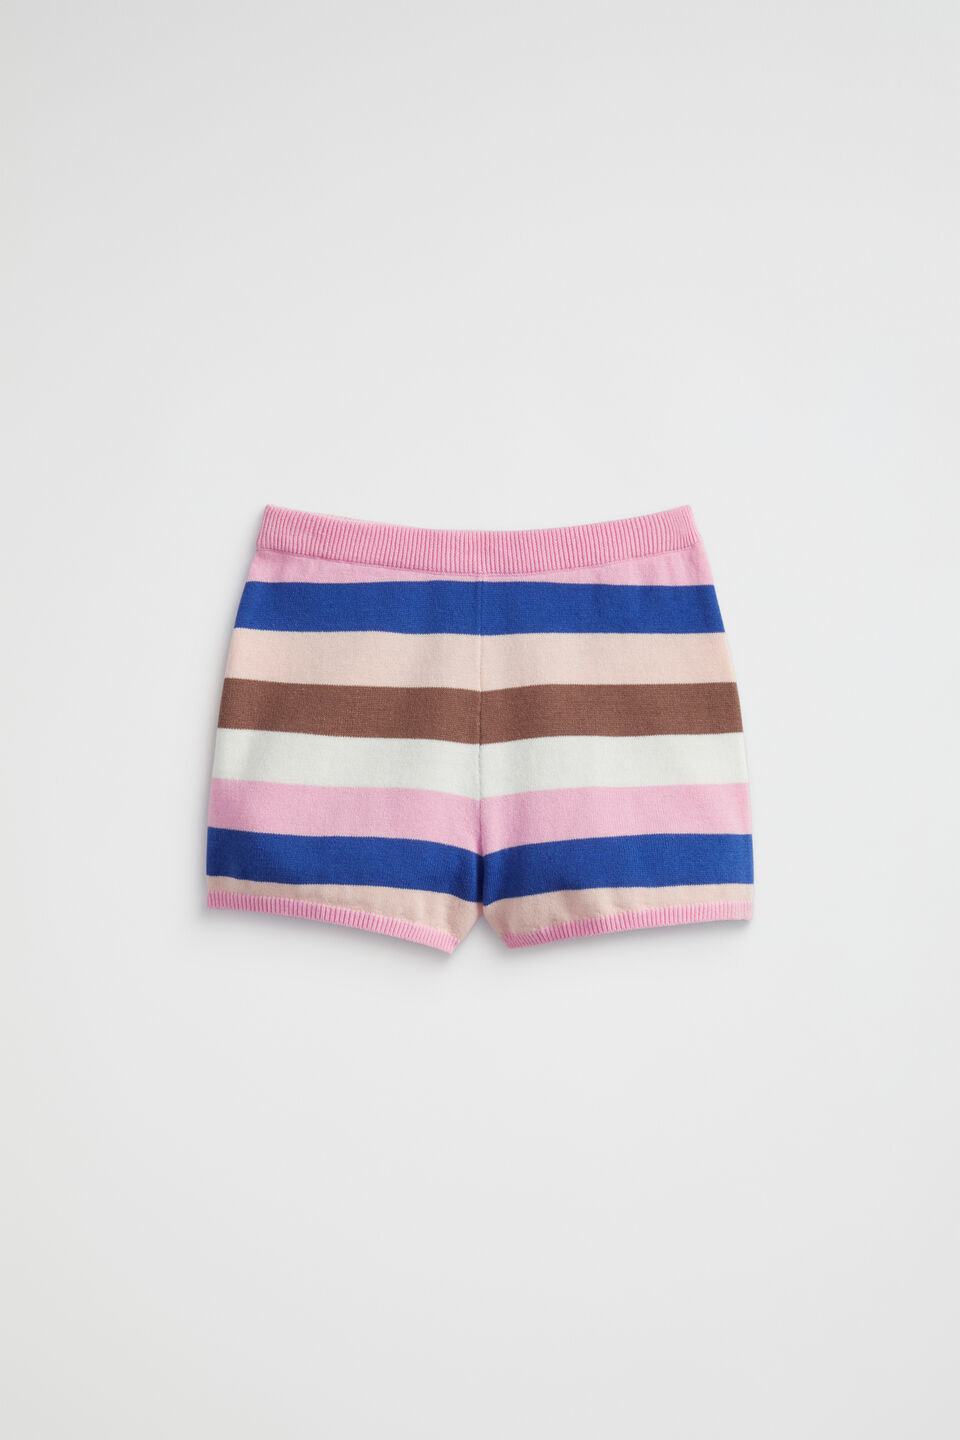 Stripe Knit Short  Candy Pink